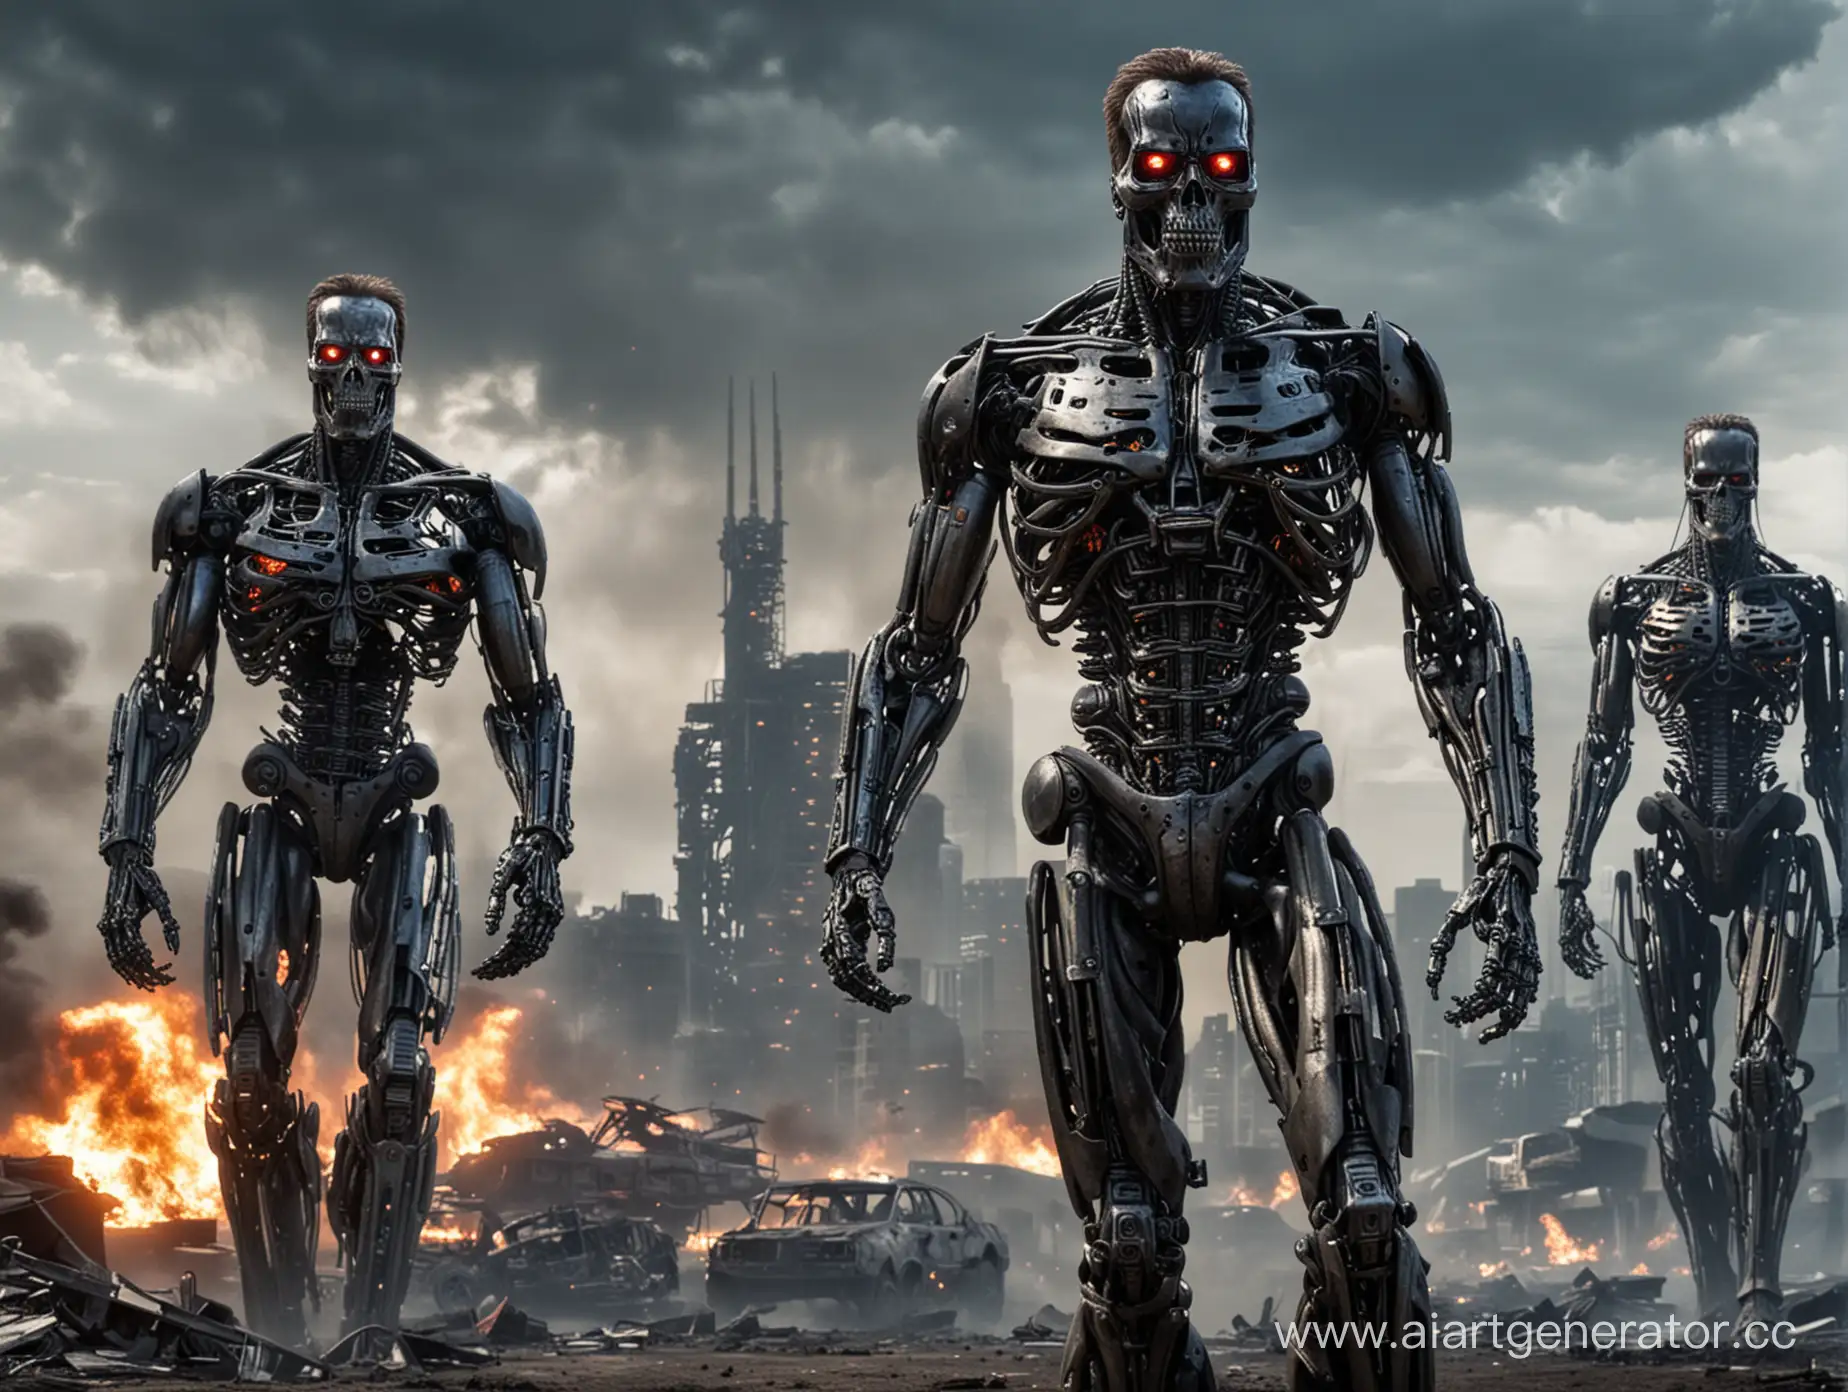 PostApocalyptic-Robot-Overlord-amidst-Urban-Ruins